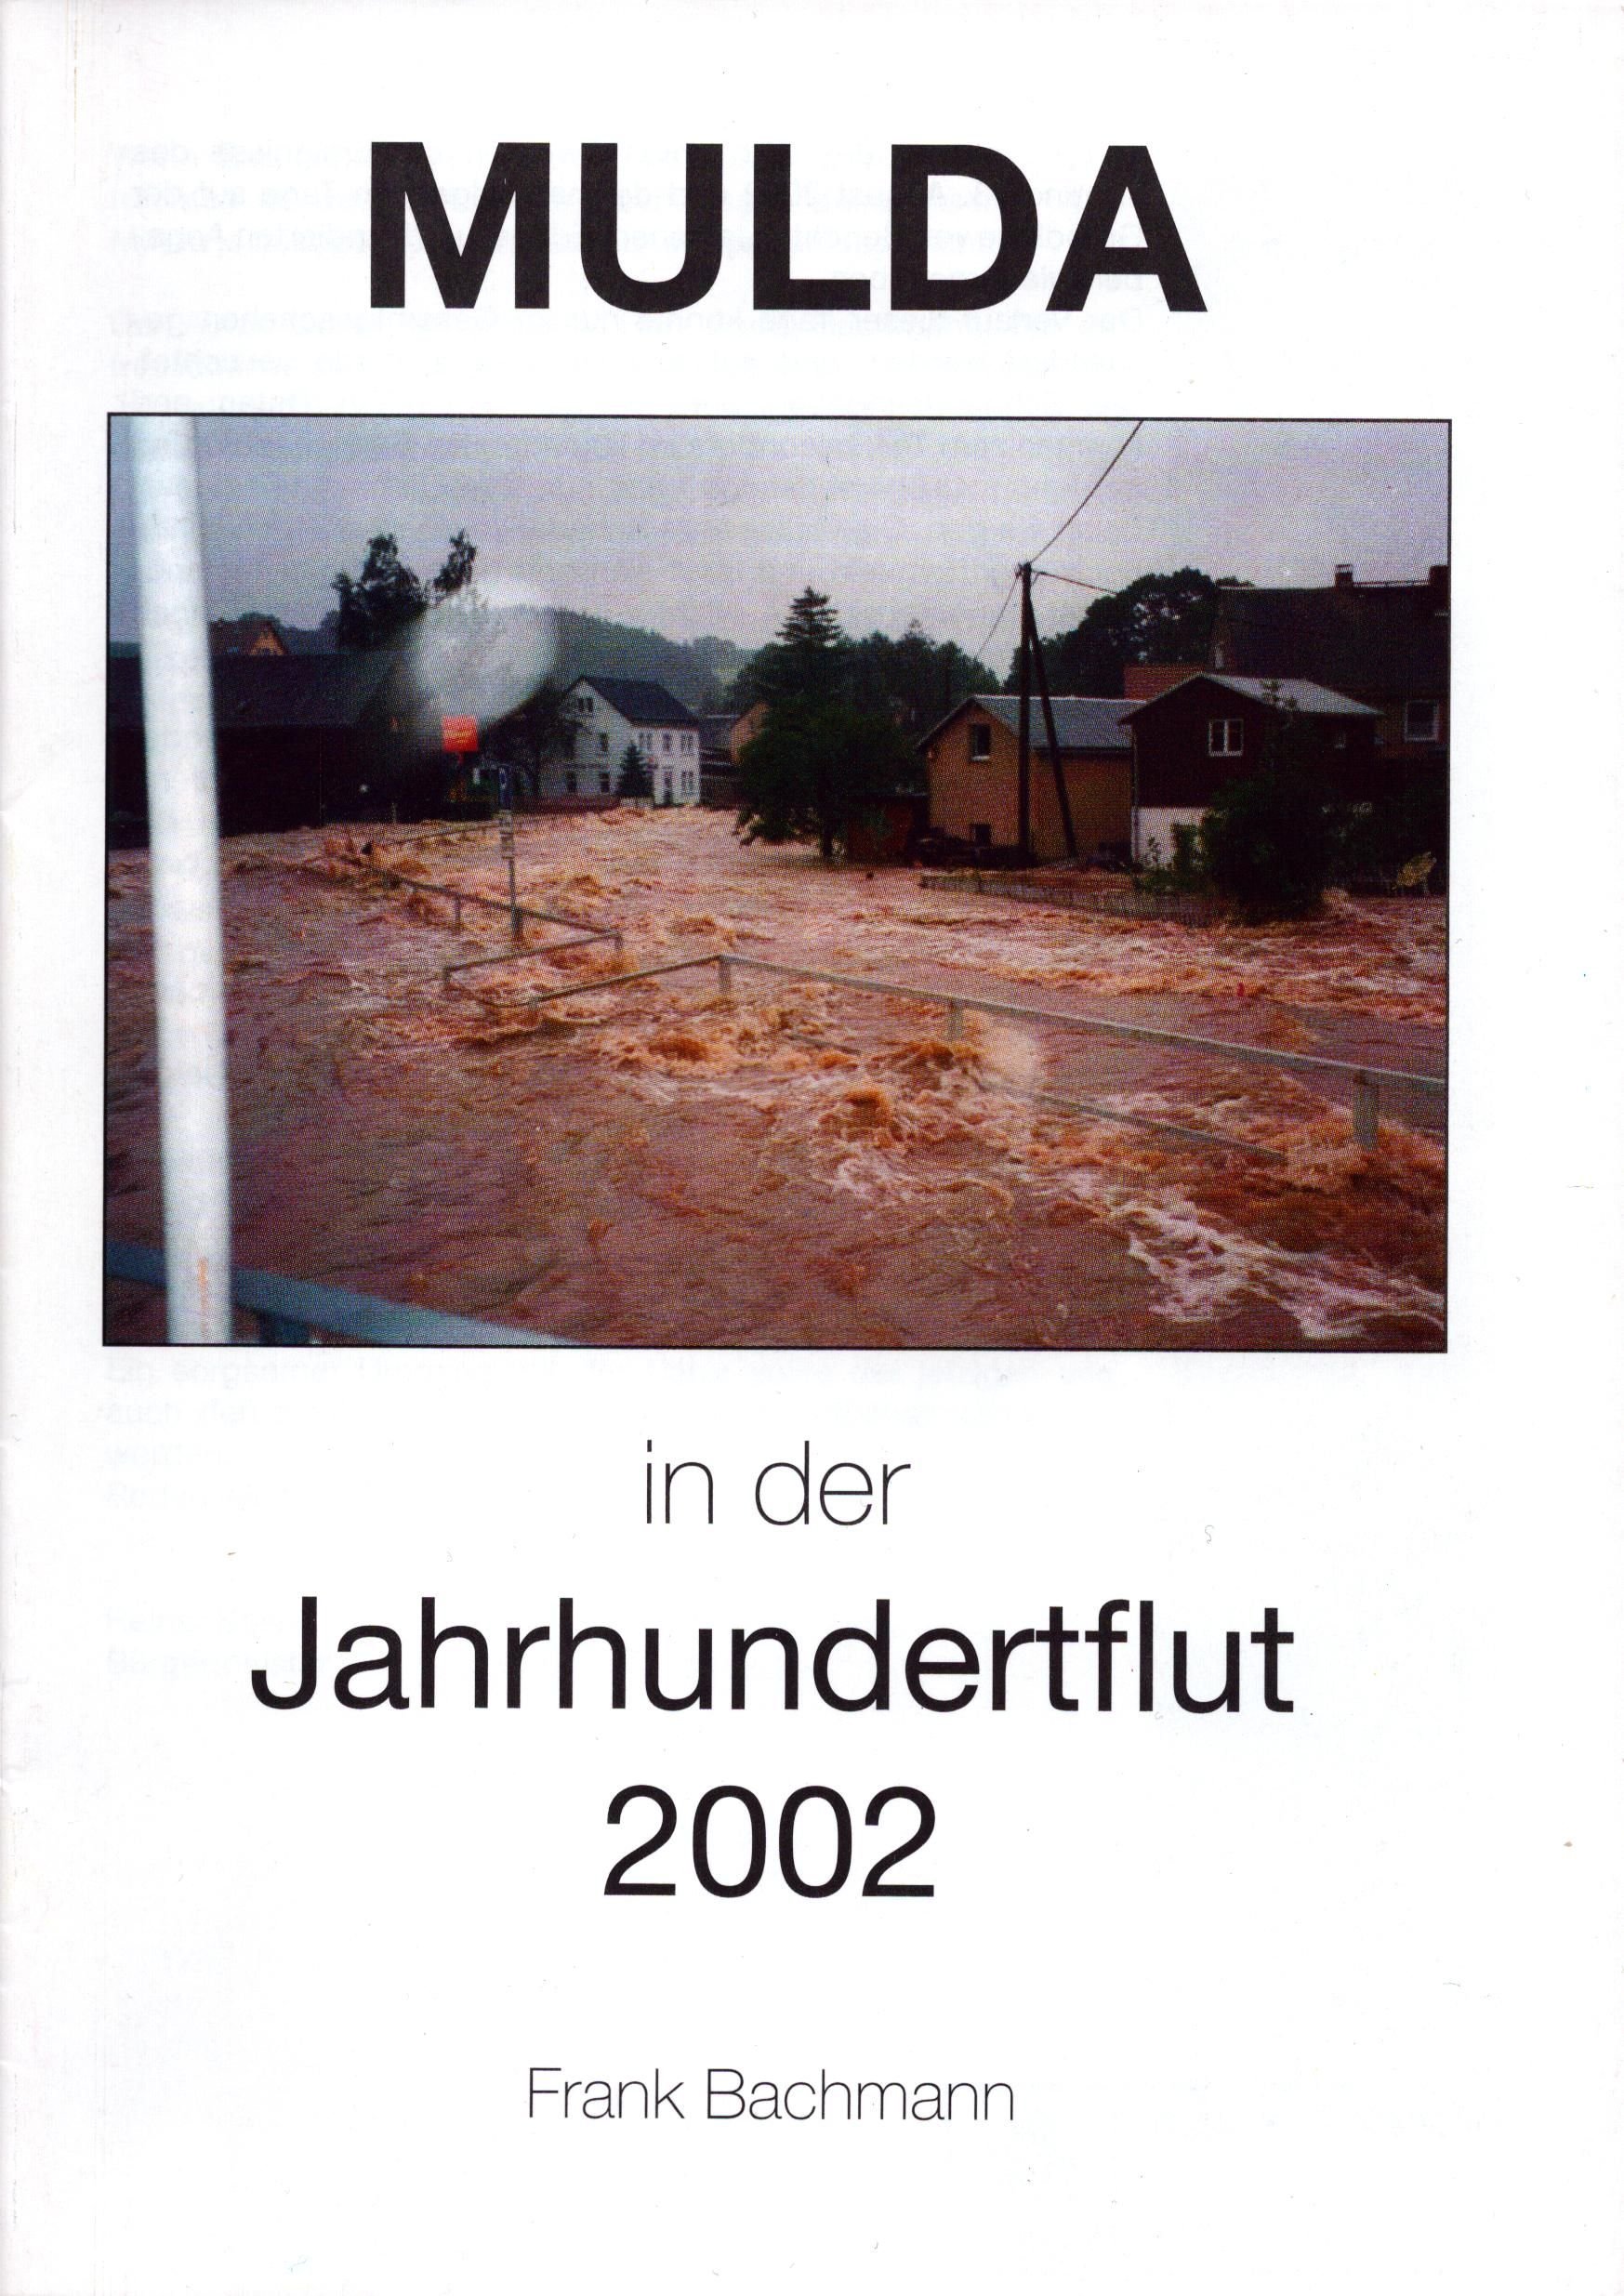 Mulda in der Jahrhundertflut 2002 (Archiv SAXONIA-FREIBERG-STIFTUNG CC BY-NC-SA)